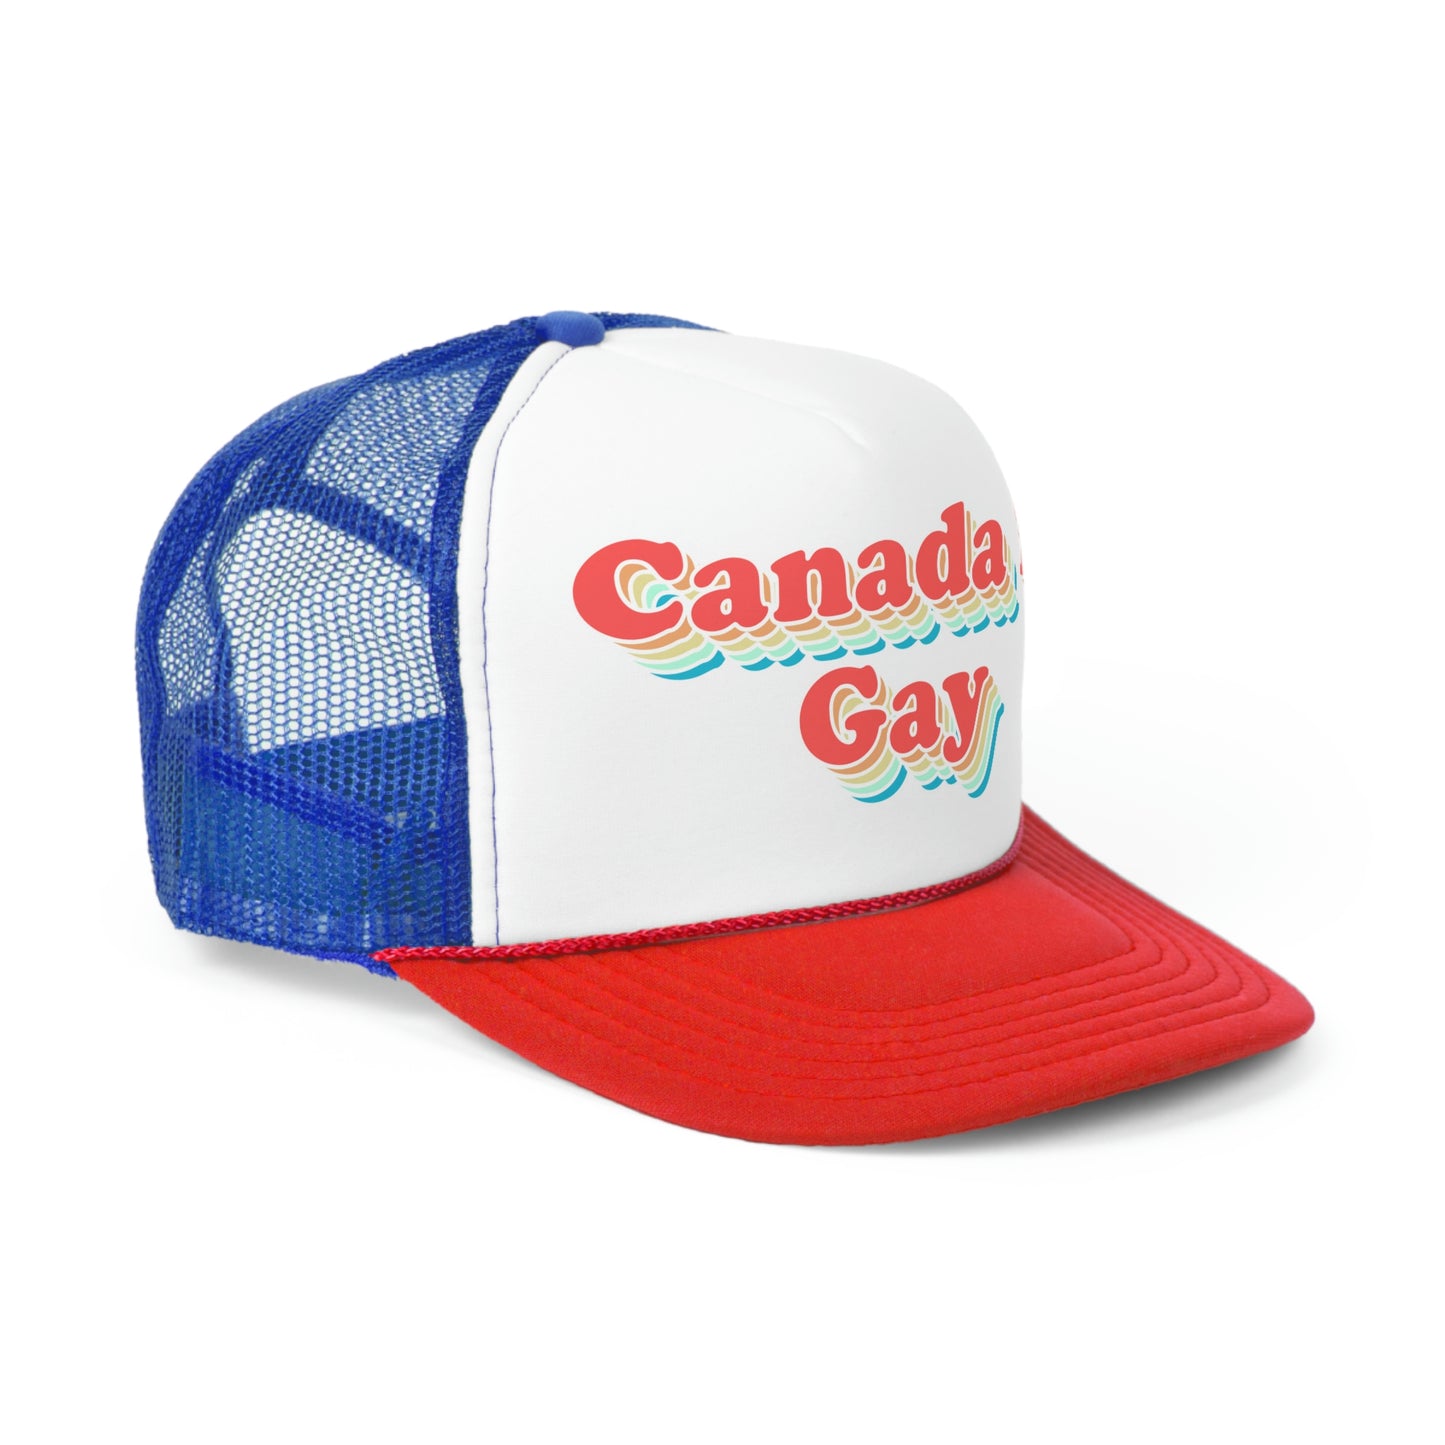 Canada is Gay Trucker Cap